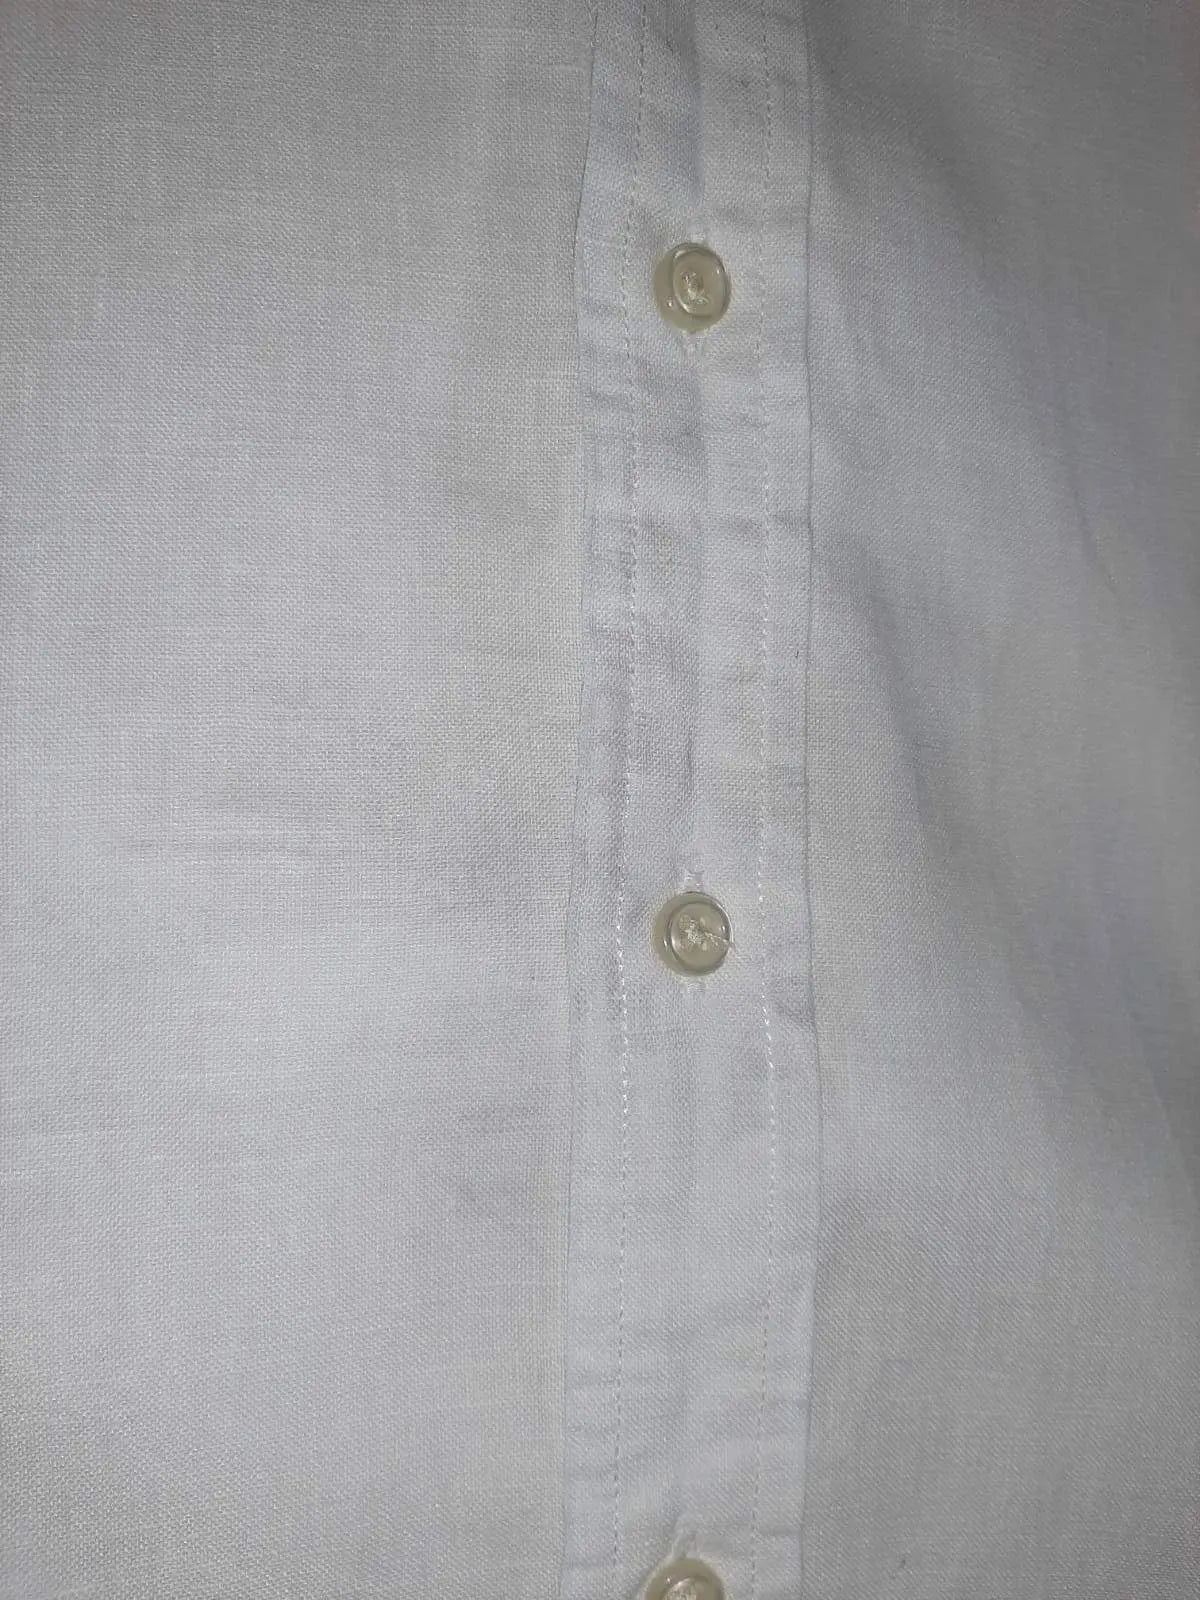 Ralph Lauren - White Linen Shirt by Ralph lauren- ThriftTale.com - Vintage and second handclothing